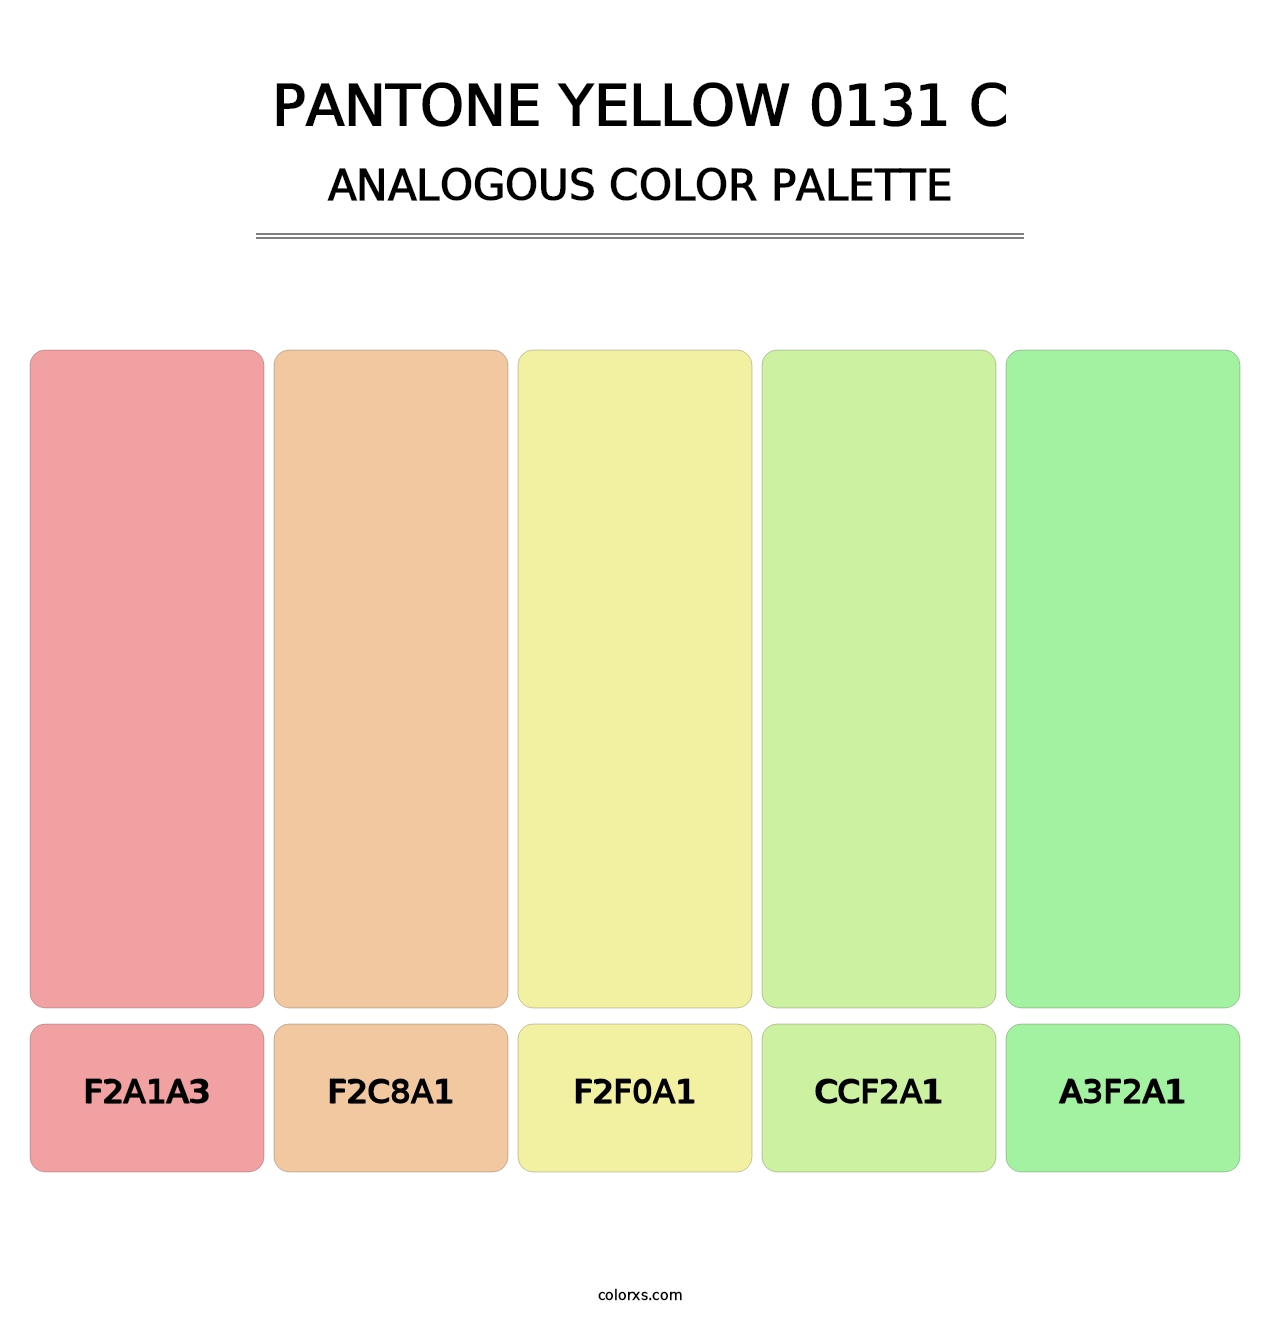 PANTONE Yellow 0131 C - Analogous Color Palette